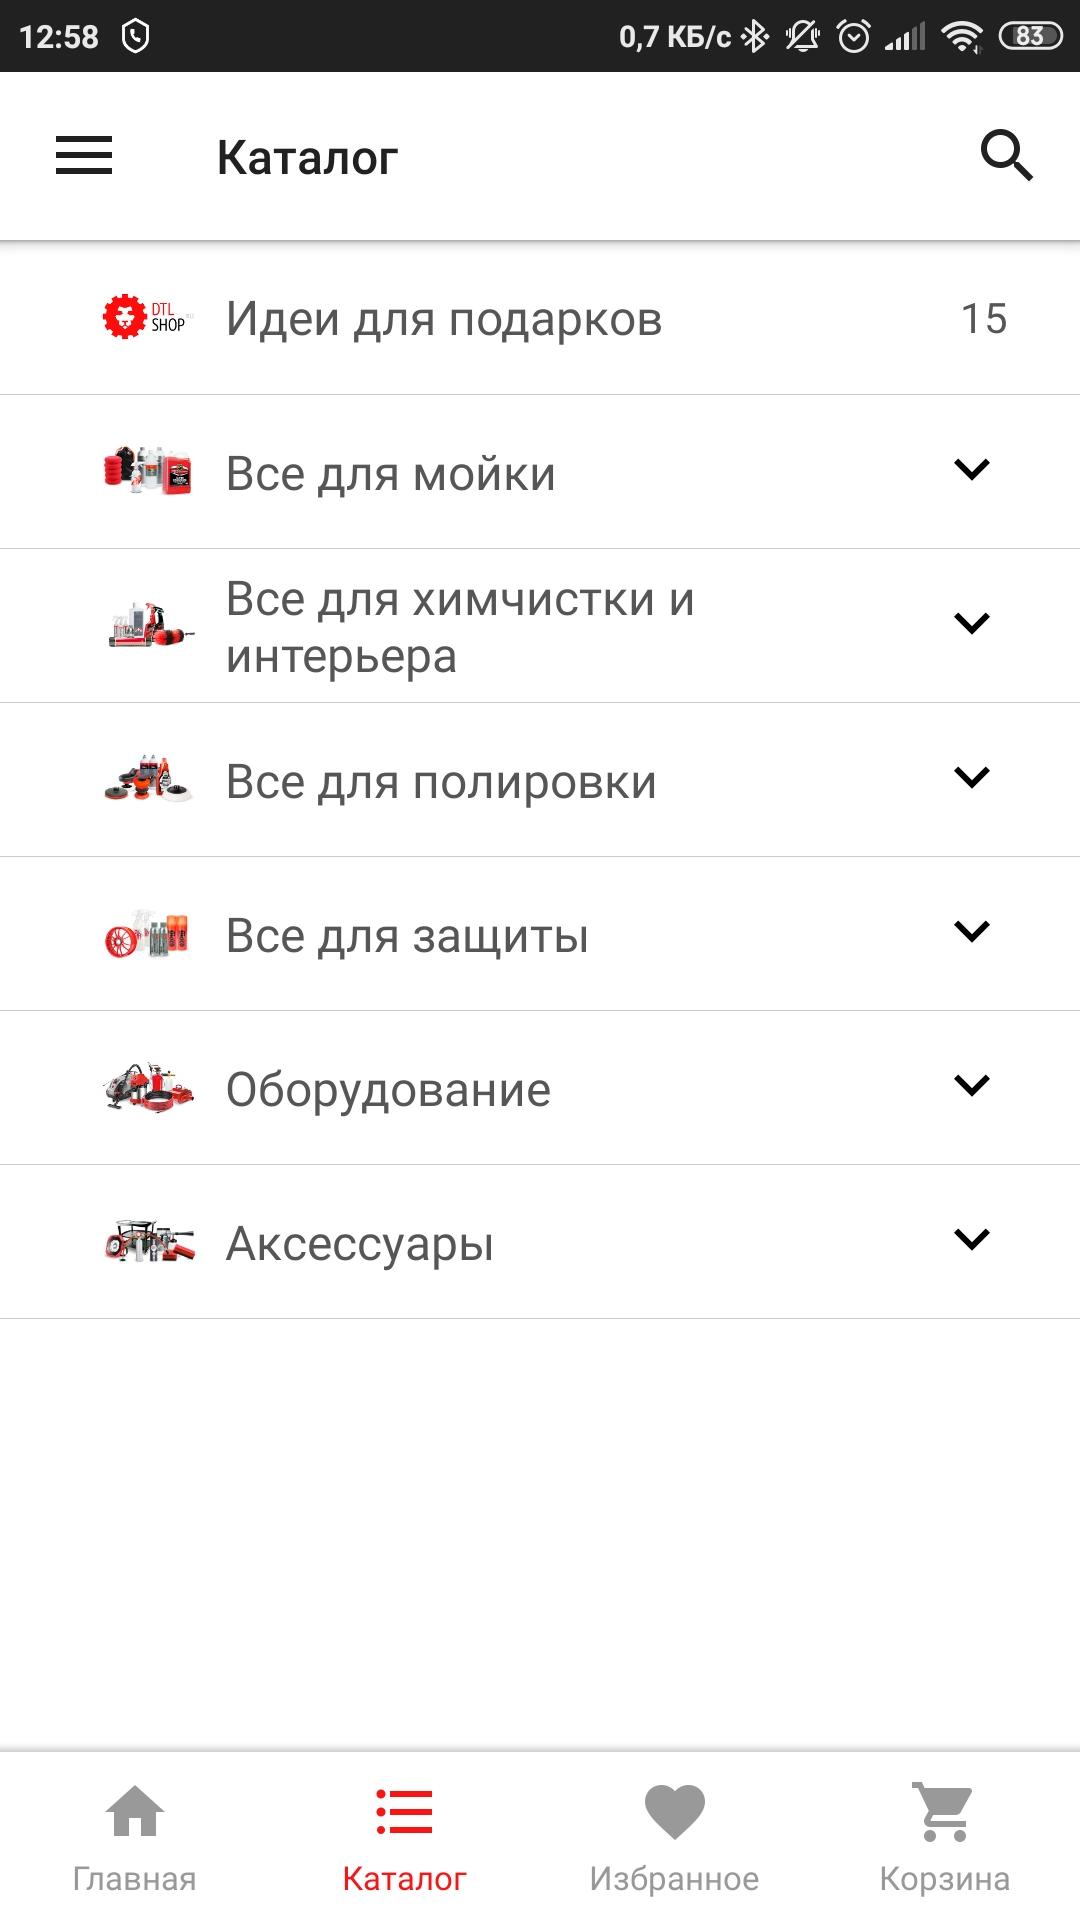 DTLshop.ru - detaling market 4.177.A.0 Screenshot 10